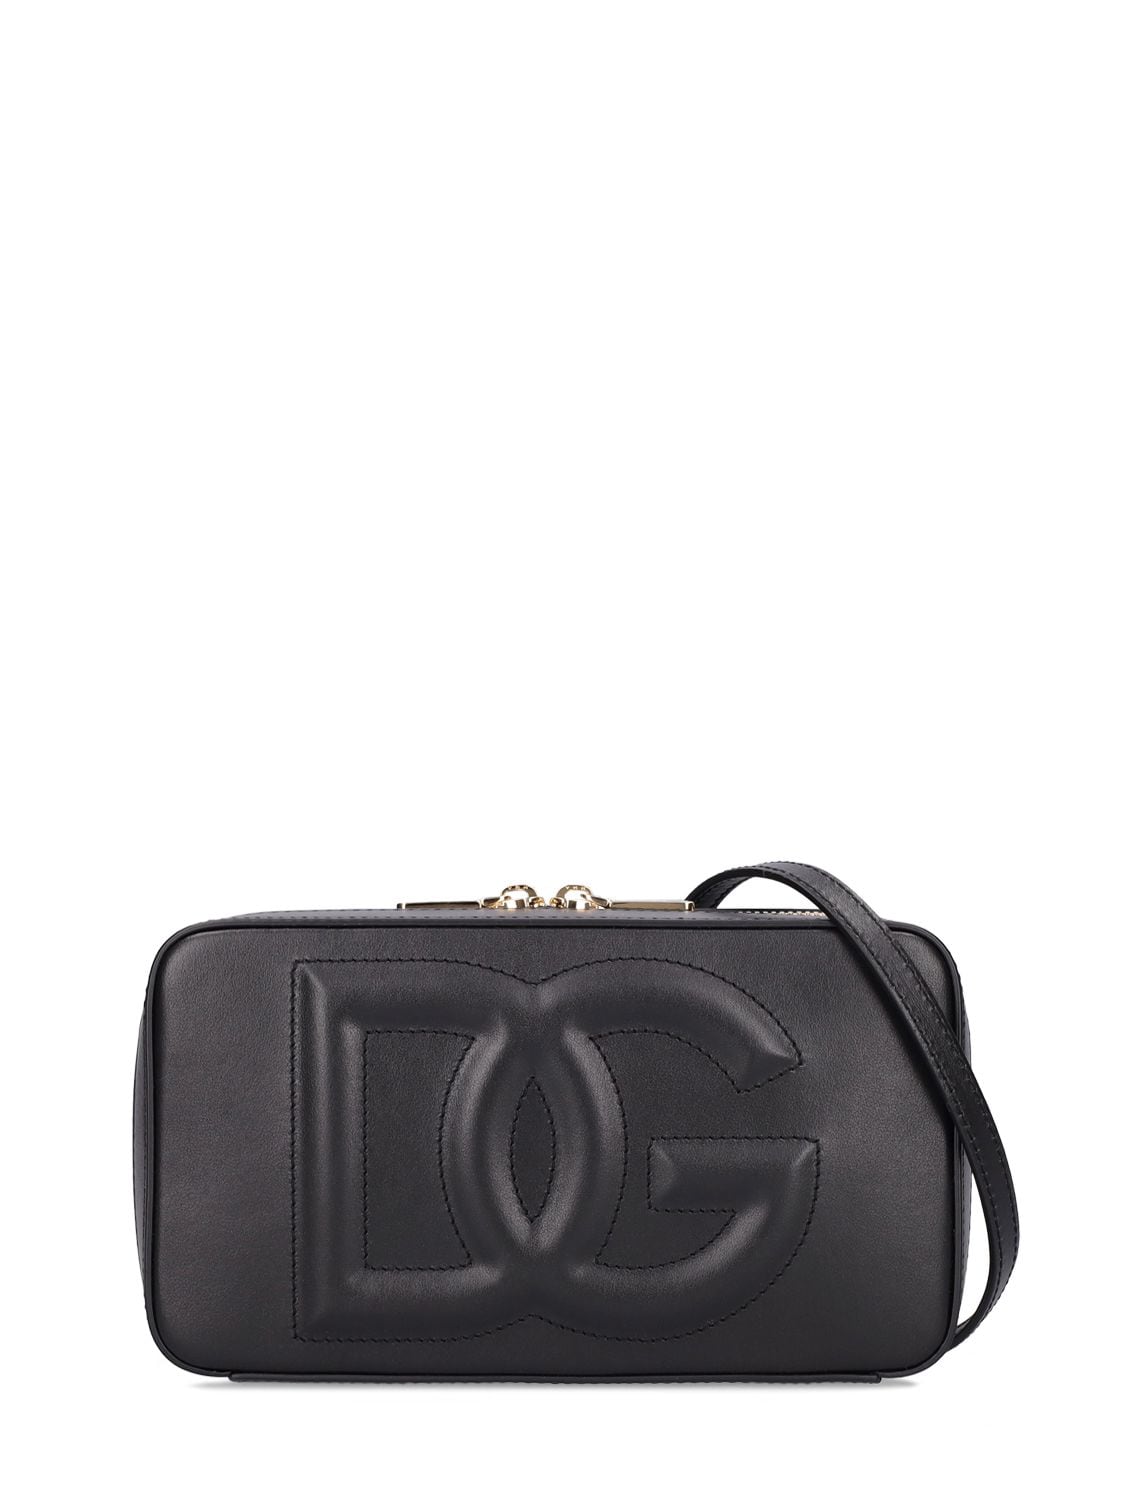 Dolce & Gabbana Small Leather Logo Camera Bag